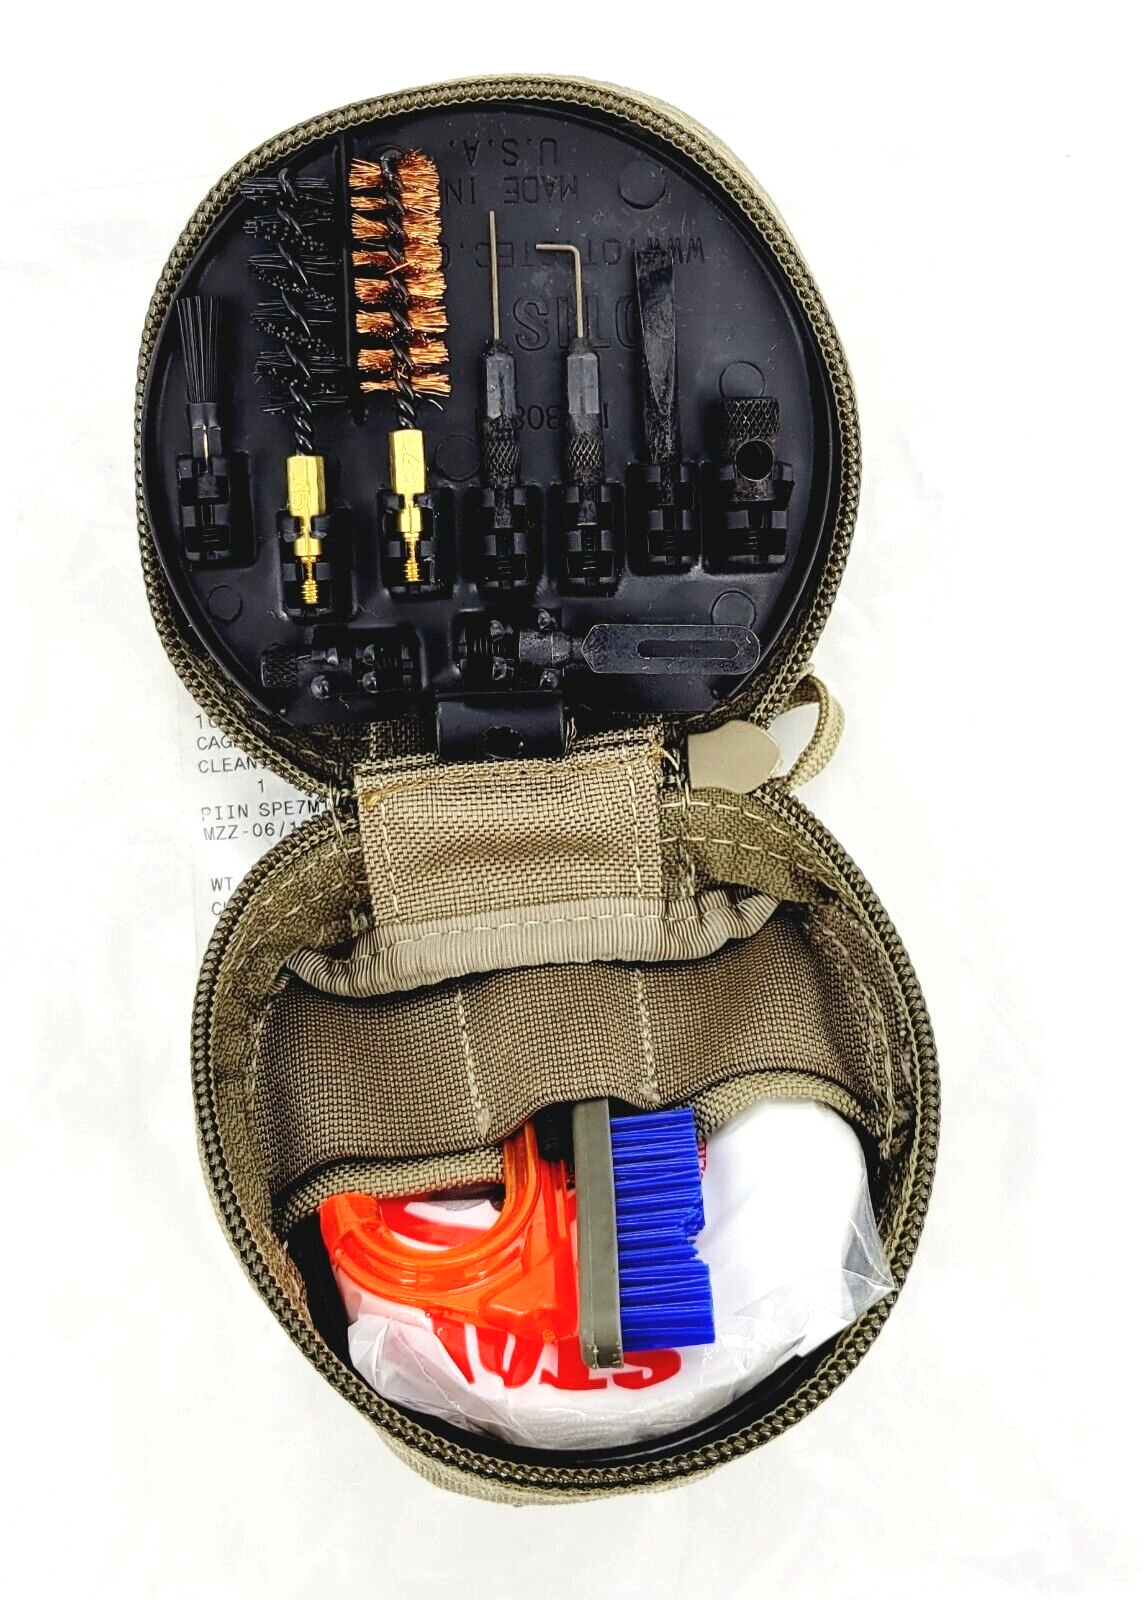 Otis 45 CAL Pistol Weapons Cleaning Kit P/N 645-2 NSN